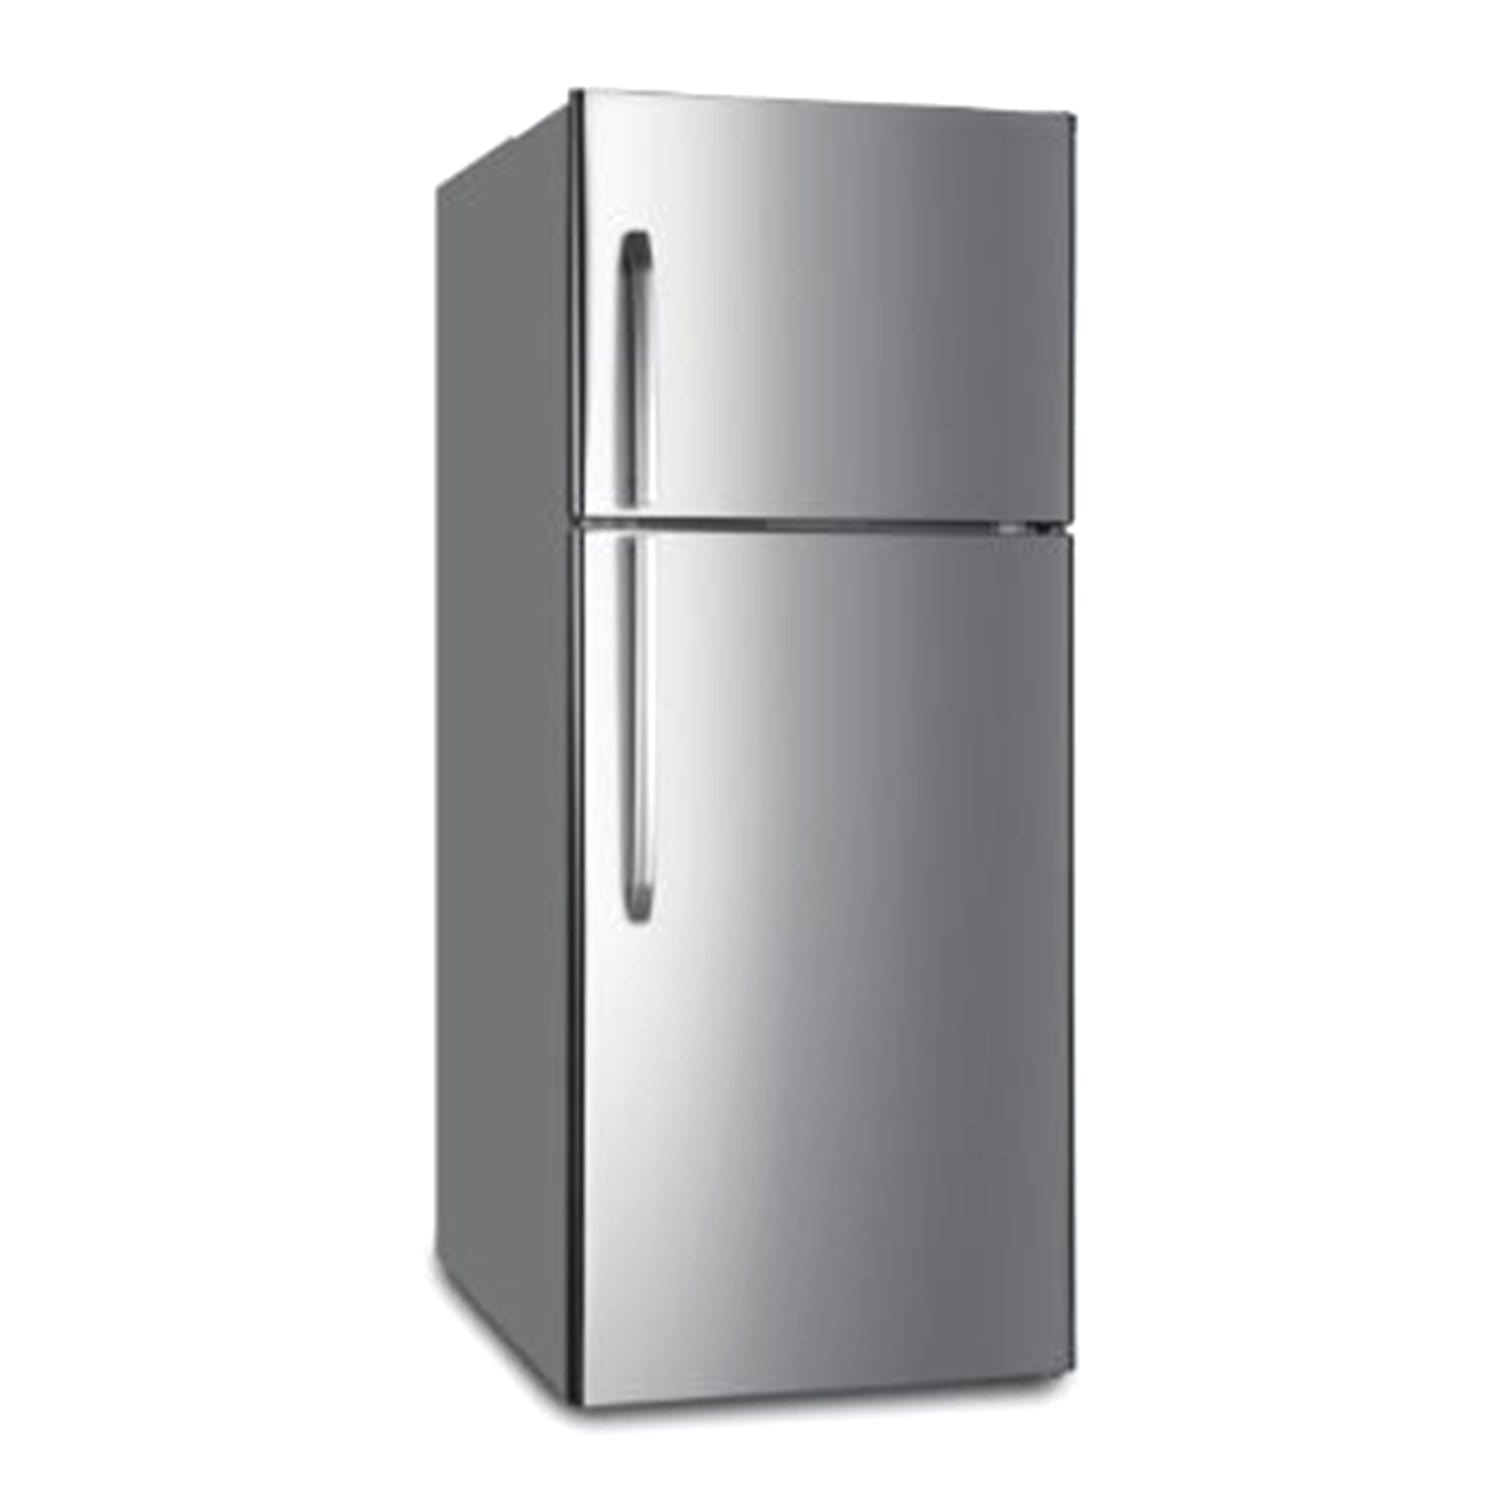 Hoover Top Mount Refrigerator - Silver - HTR650L-S - Jashanmal Home